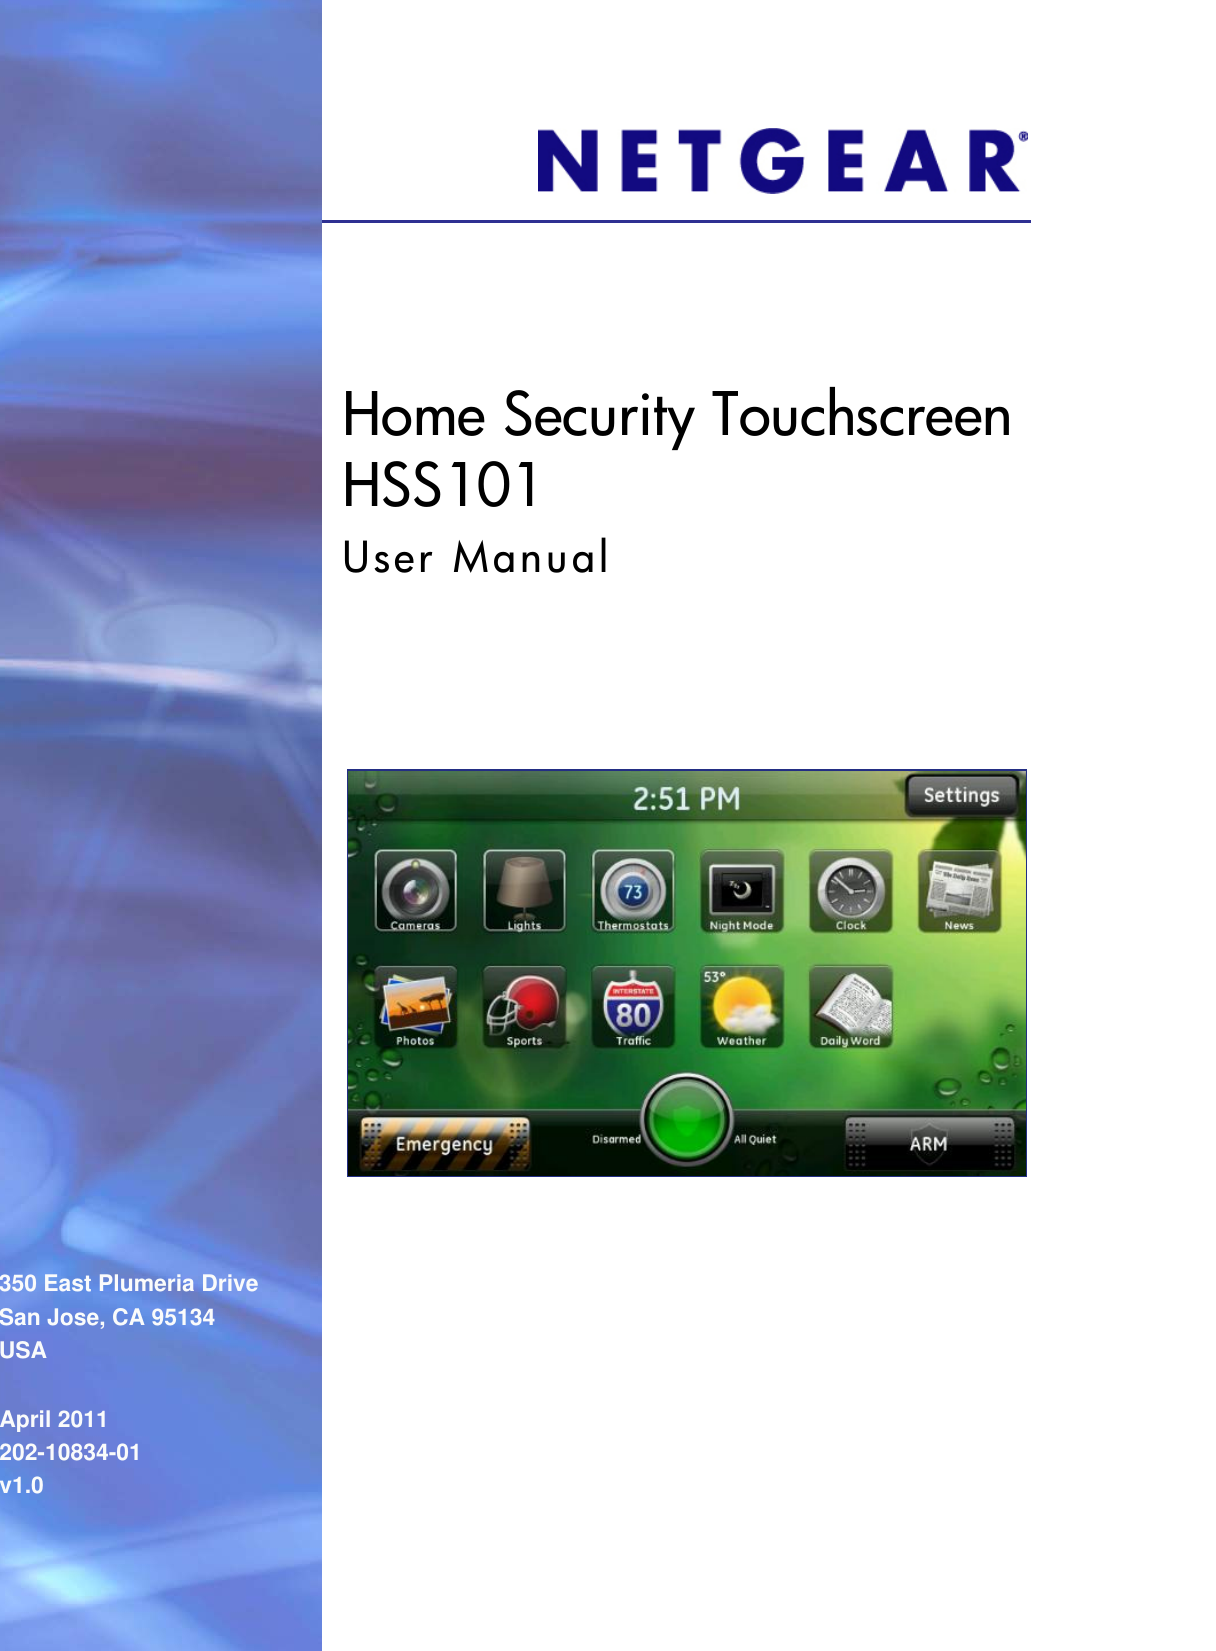 350 East Plumeria DriveSan Jose, CA 95134USAApril 2011202-10834-01v1.0Home Security Touchscreen HSS101User Manual